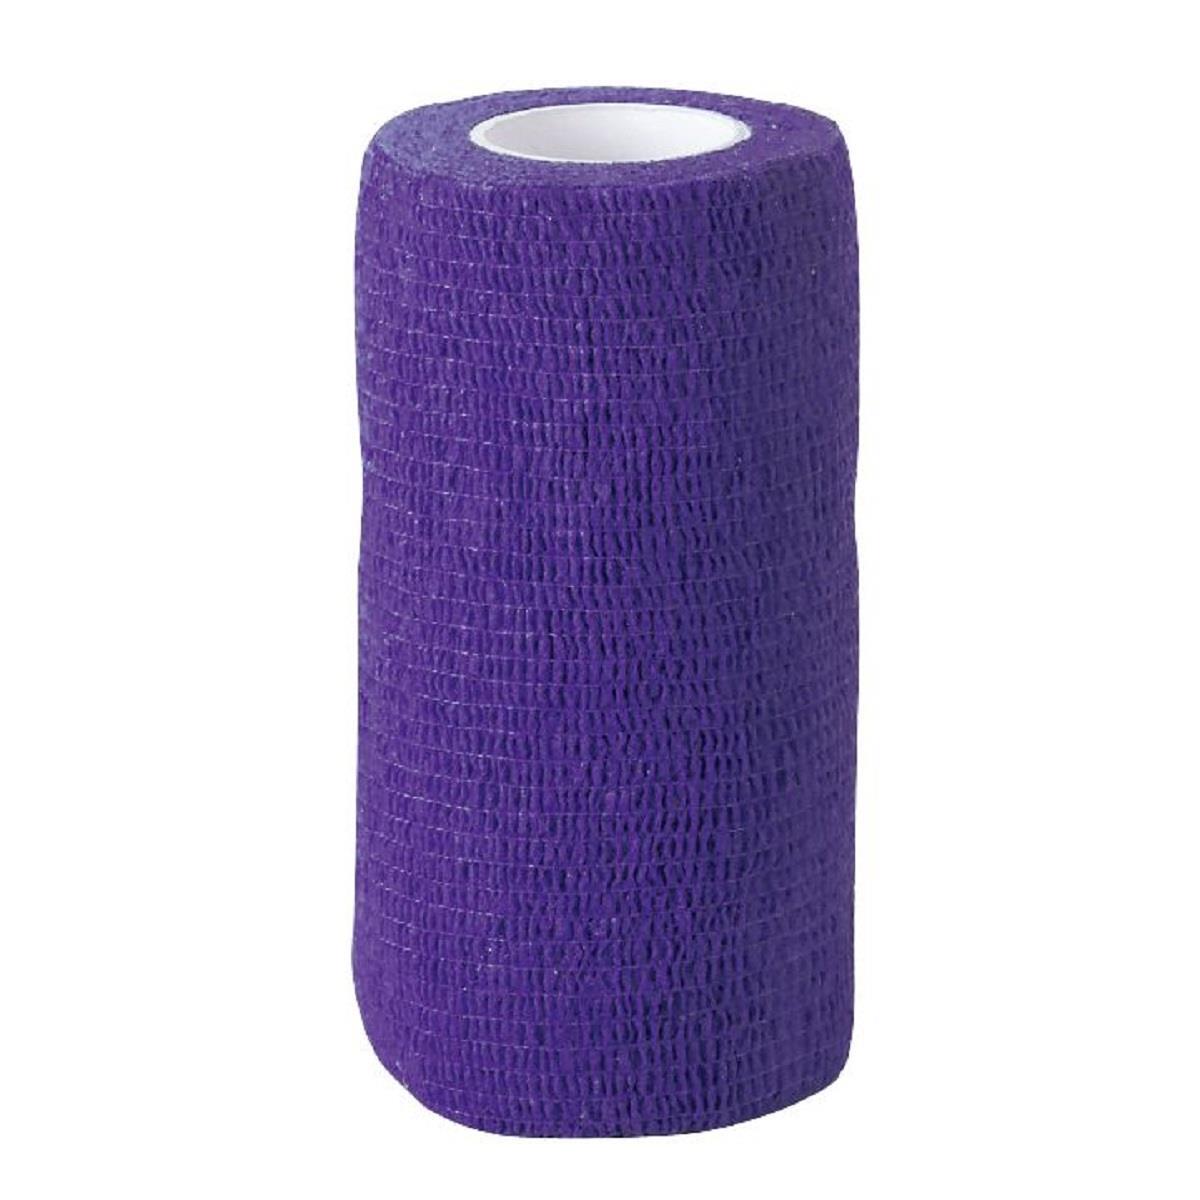 Self-adhesive Bandage EquiLastic lilac